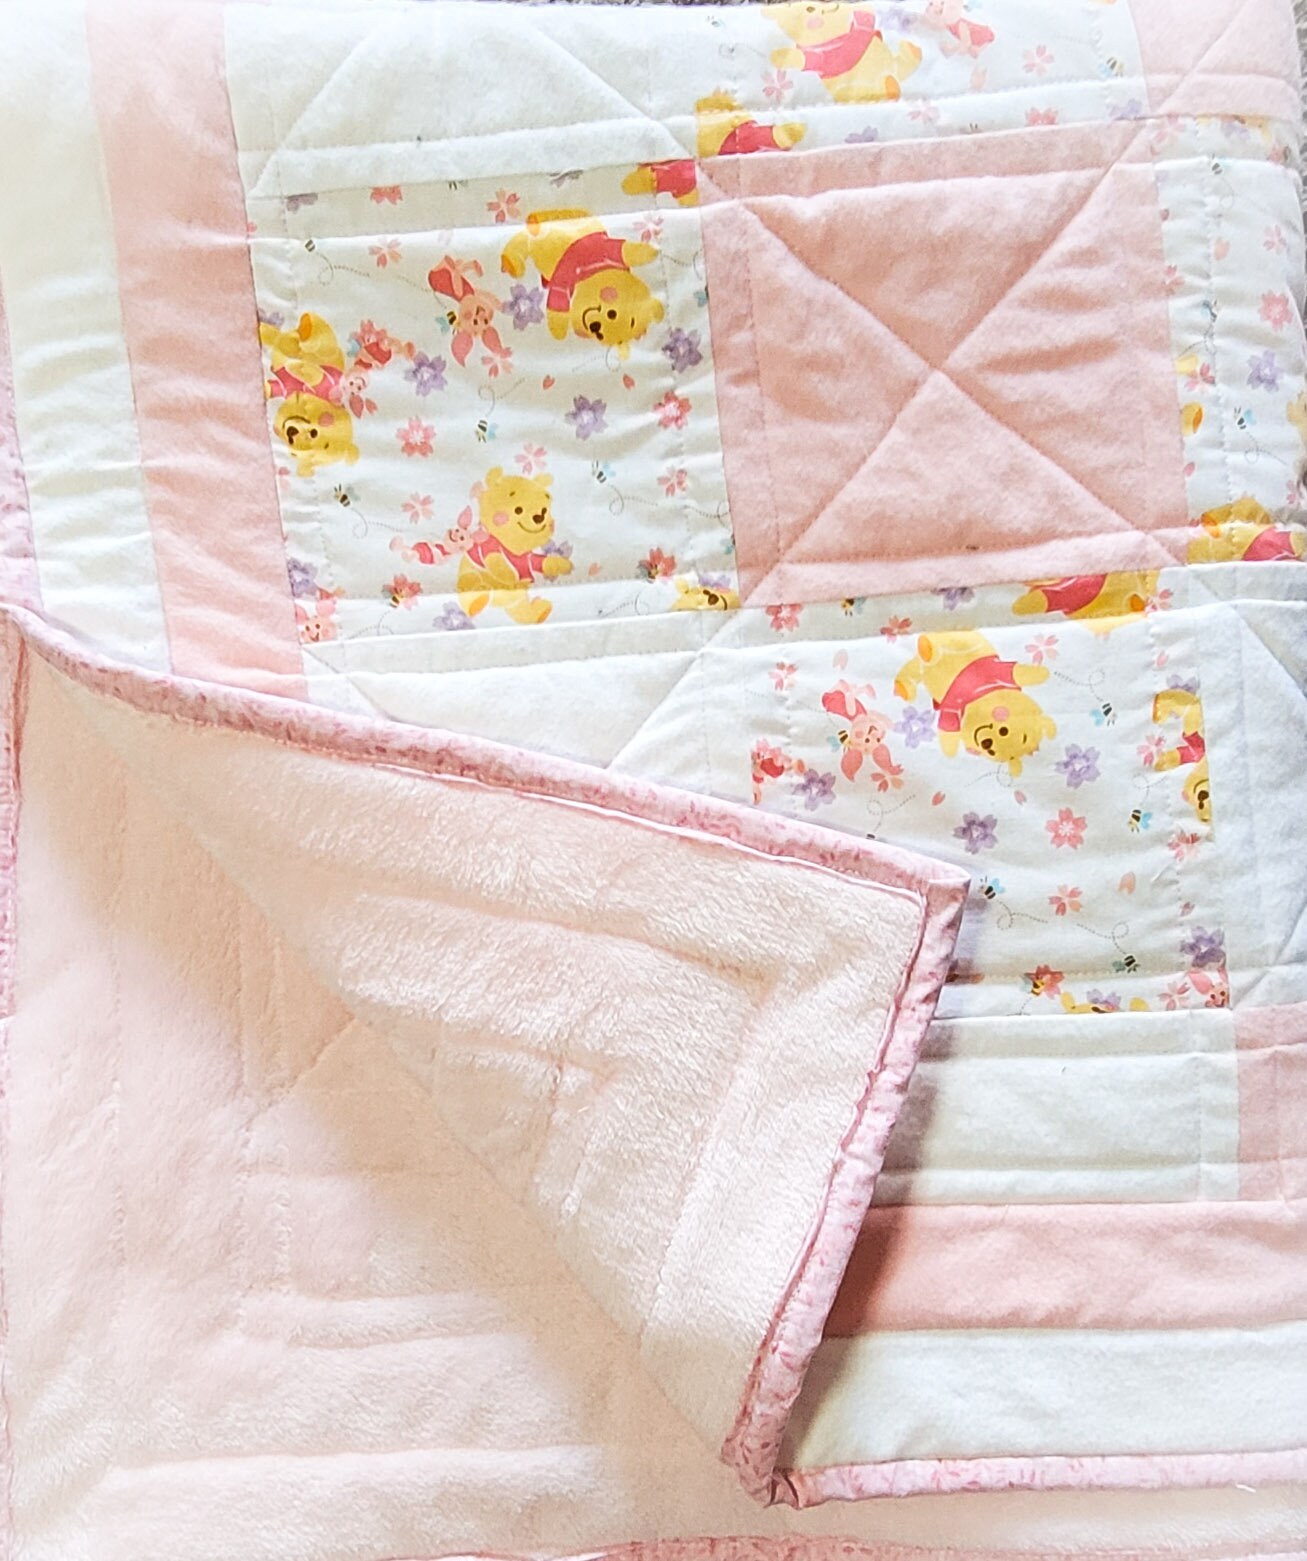 Baby crib quilt fabric panel Winnie the Pooh Tigger Eeyore Piglet